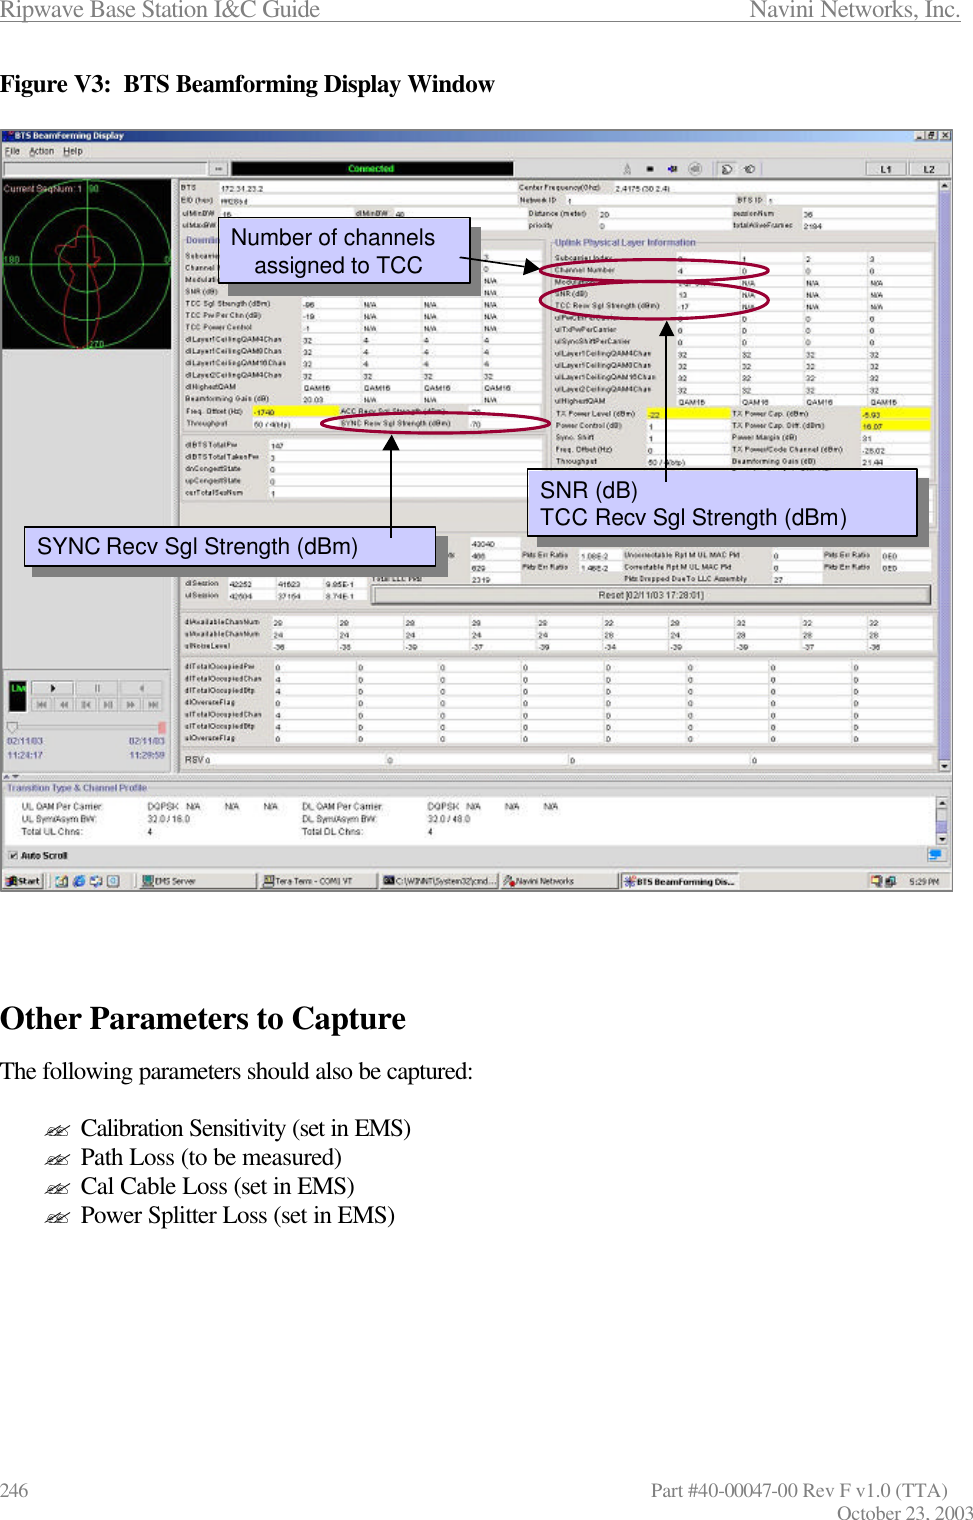 Ripwave Base Station I&amp;C Guide                      Navini Networks, Inc. 246                   Part #40-00047-00 Rev F v1.0 (TTA) October 23, 2003 Figure V3:  BTS Beamforming Display Window     Other Parameters to Capture  The following parameters should also be captured:  ?? Calibration Sensitivity (set in EMS) ?? Path Loss (to be measured)  ?? Cal Cable Loss (set in EMS) ?? Power Splitter Loss (set in EMS)       SYNC Recv Sgl Strength (dBm)SYNC Recv Sgl Strength (dBm)Number of channels assigned to TCCNumber of channels assigned to TCCSNR (dB)TCC Recv Sgl Strength (dBm)SNR (dB)TCC Recv Sgl Strength (dBm)SYNC Recv Sgl Strength (dBm)SYNC Recv Sgl Strength (dBm)Number of channels assigned to TCCNumber of channels assigned to TCCSNR (dB)TCC Recv Sgl Strength (dBm)SNR (dB)TCC Recv Sgl Strength (dBm)